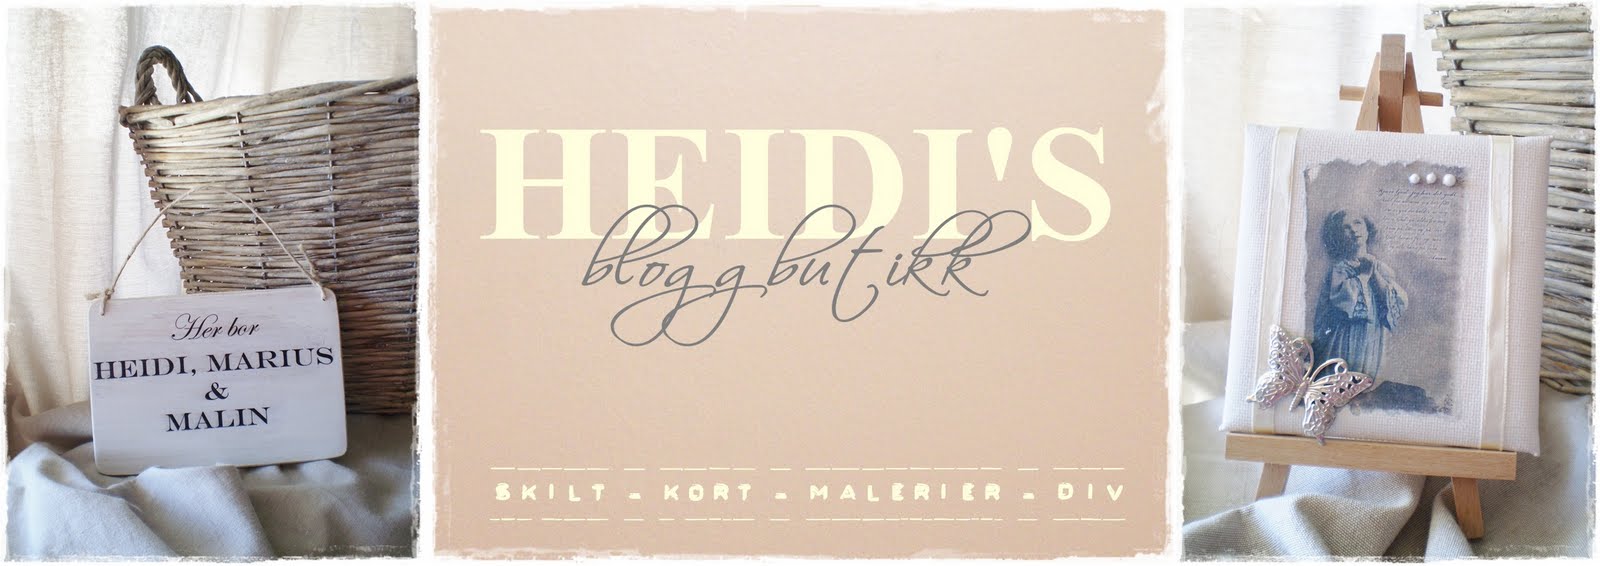 Heidi's Bloggbutikk